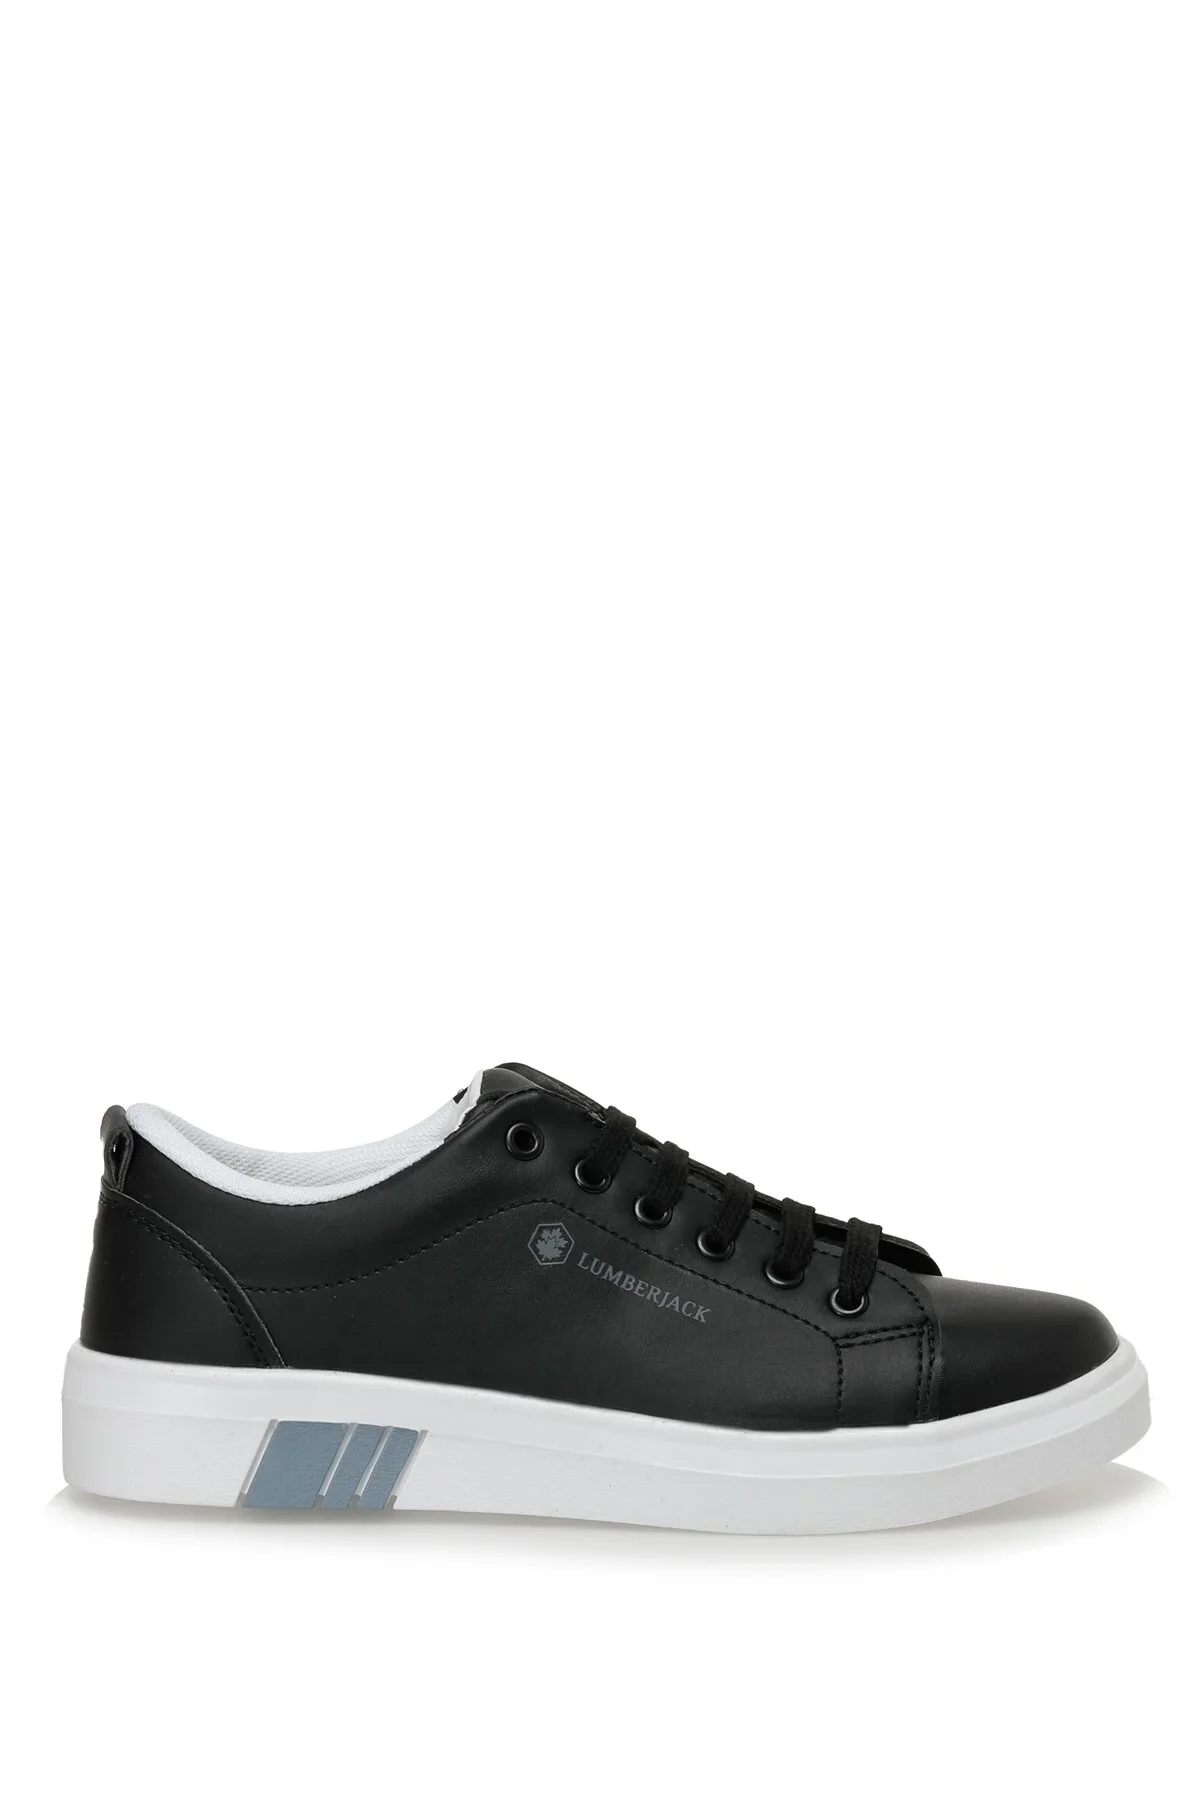 TINA 3FX Kadın Sneaker Spor Ayakkabı-Siyah - 2